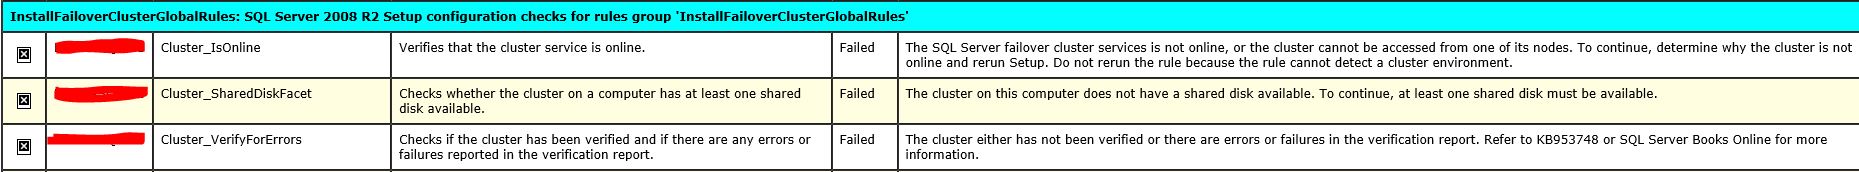 SQL2008R2_ClusterFailure